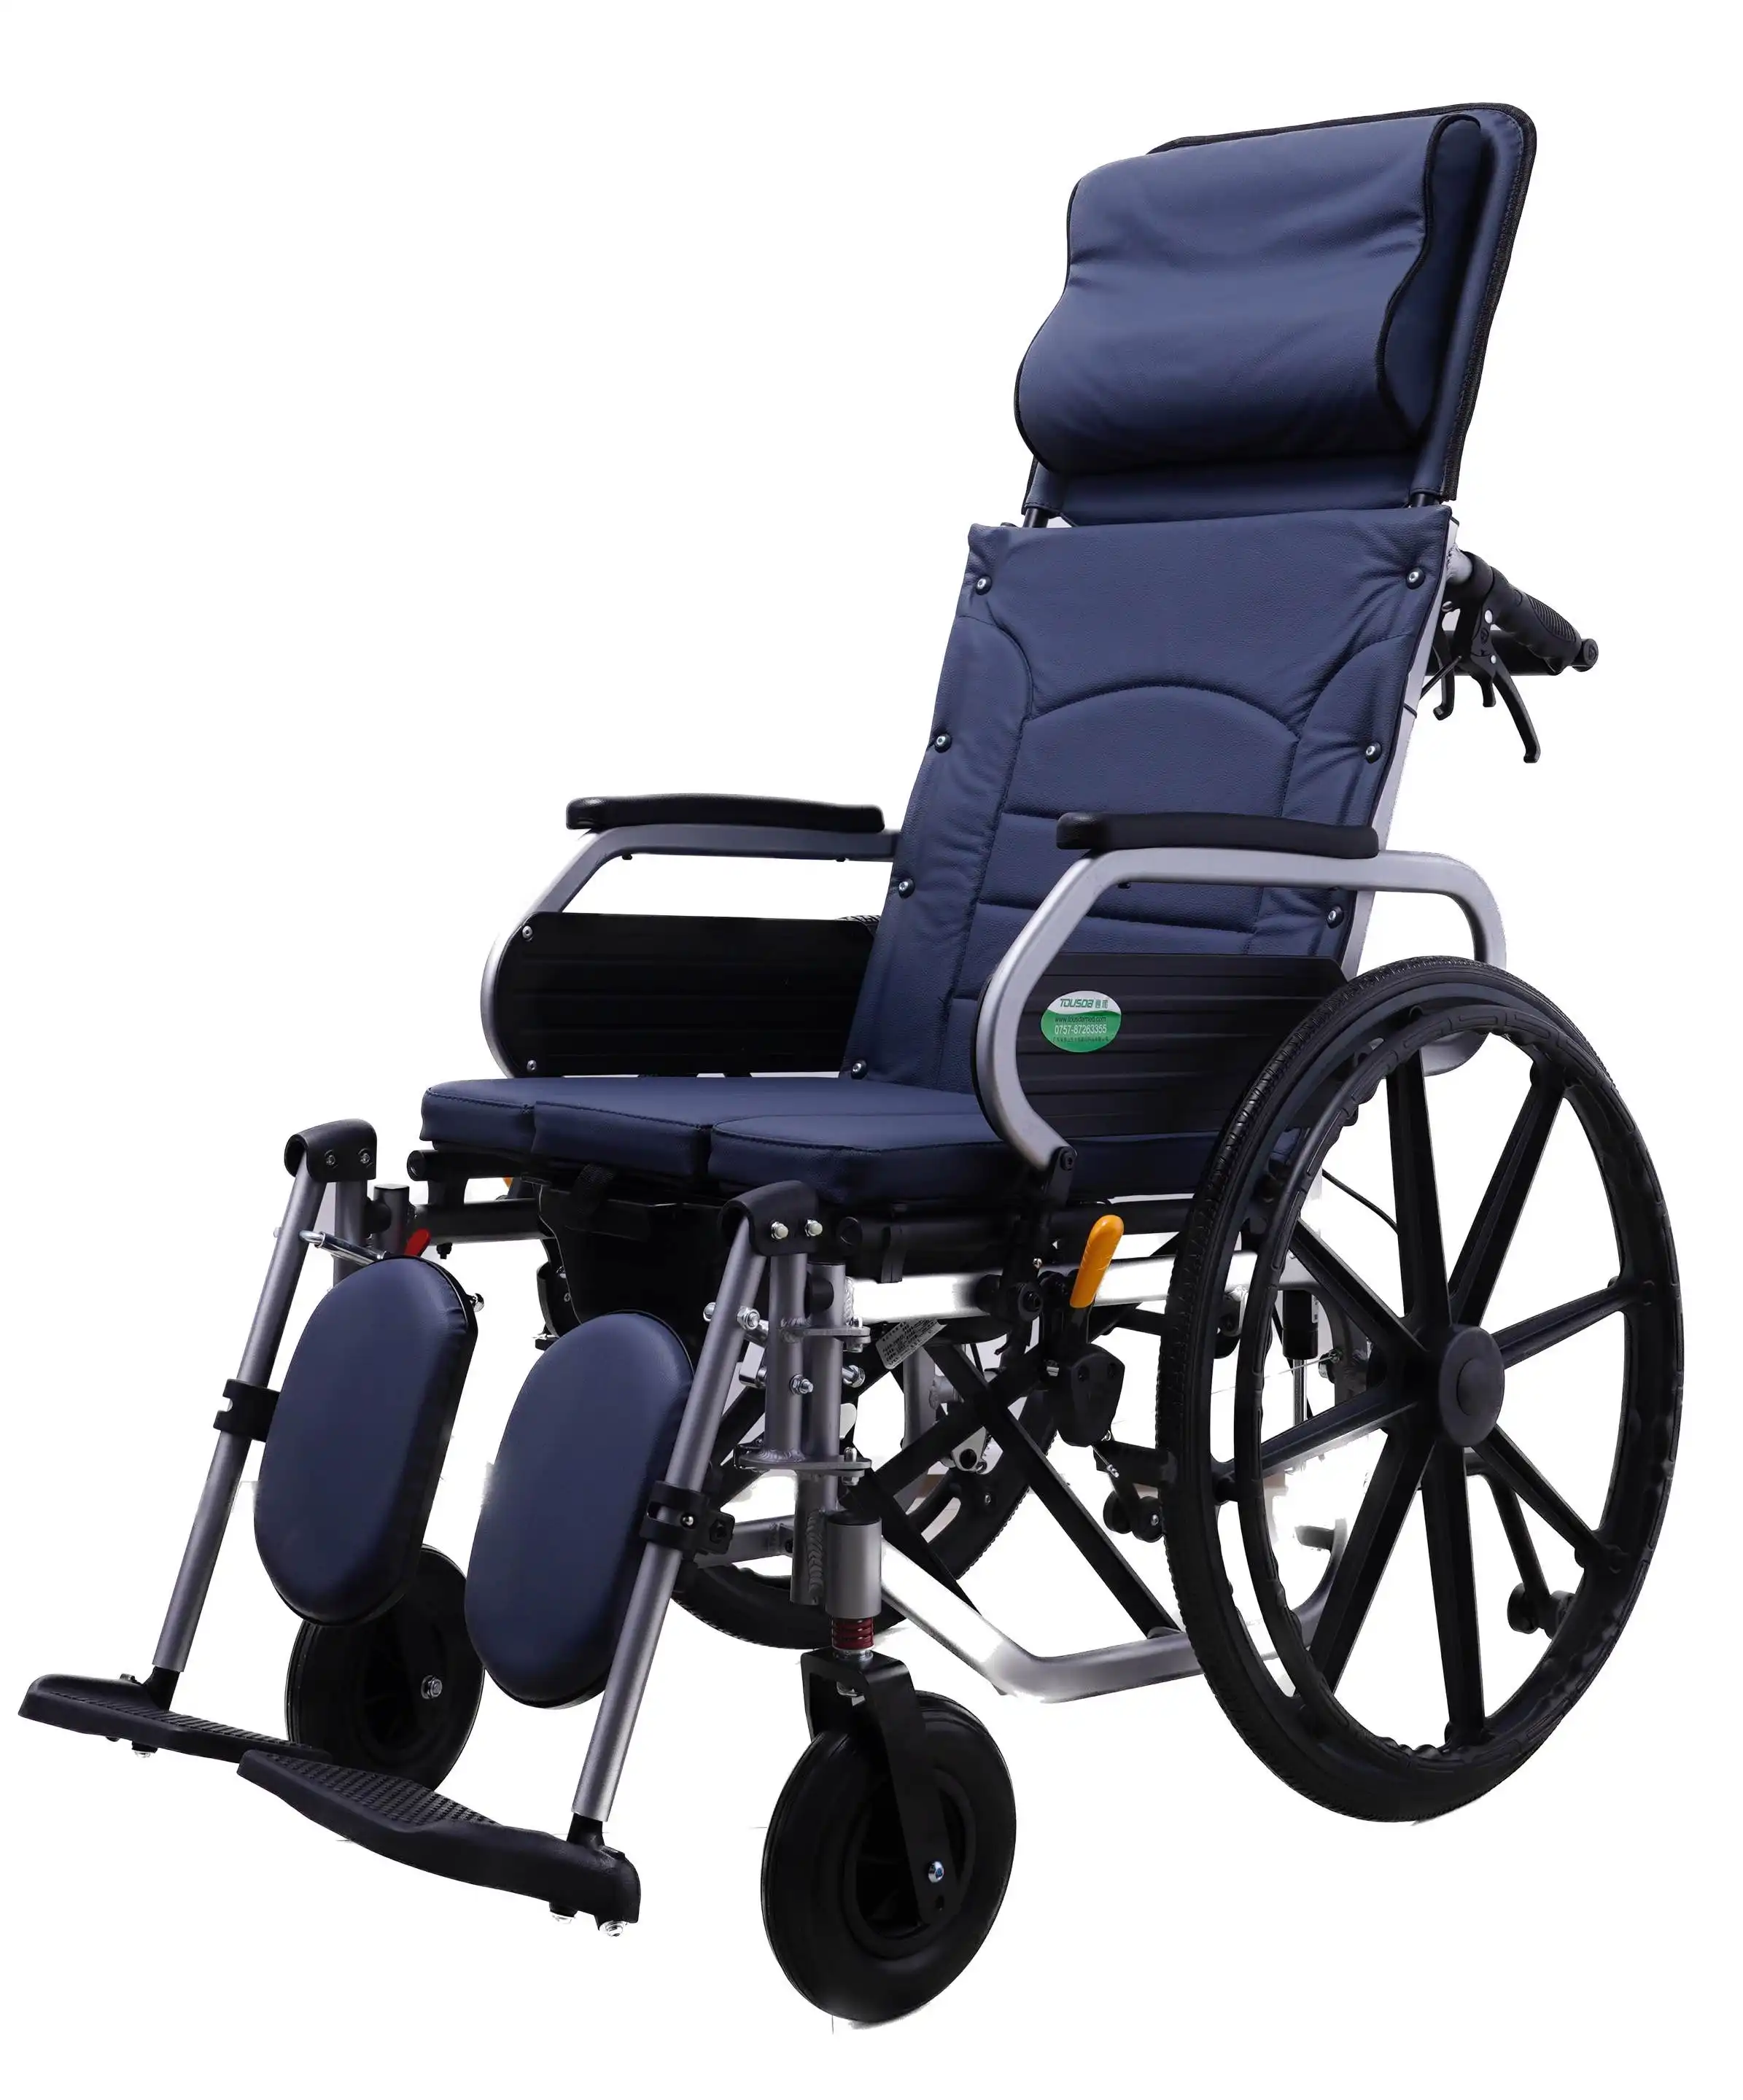 Passeggino leggero per adulti sedia a rotelle leggera per anziani in alluminio sedia a rotelle idraulica reclinabile highback sedia a rotelle